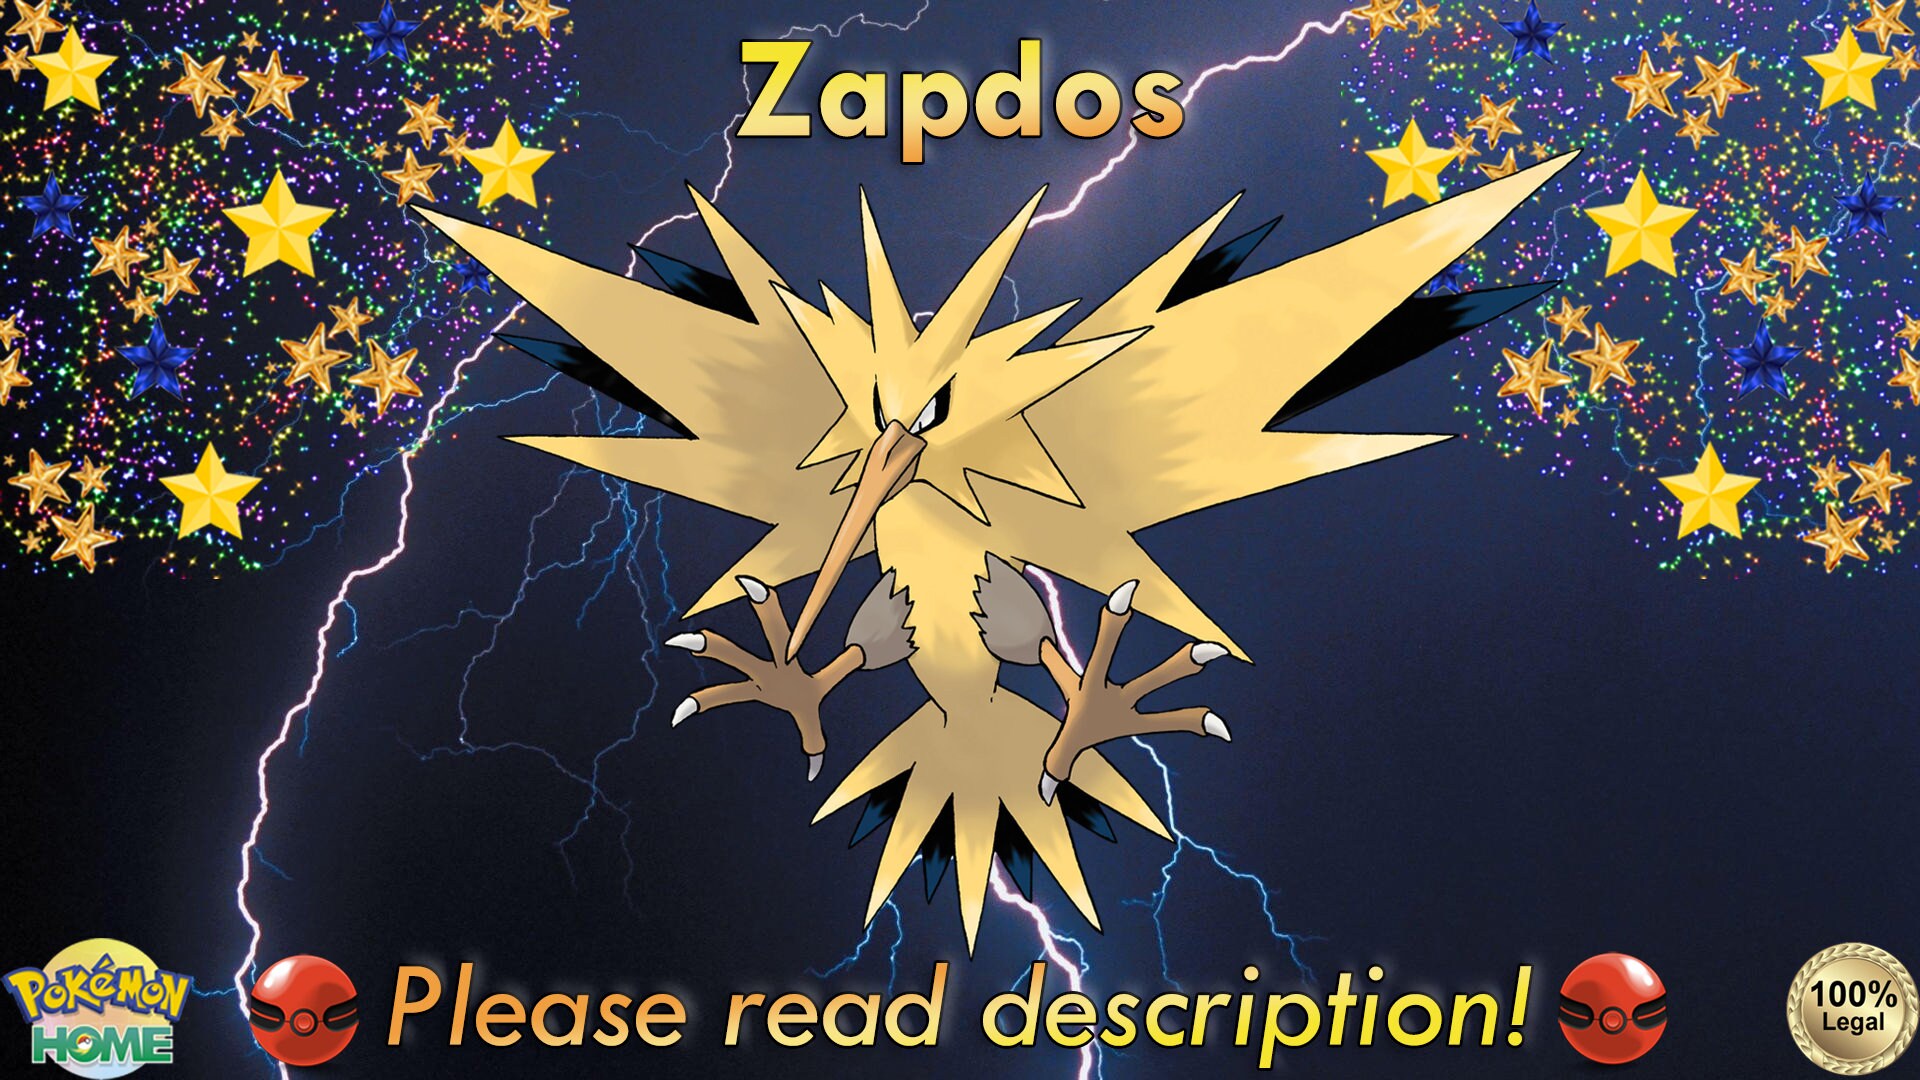 Zapdos (Pokémon) - Bulbapedia, the community-driven Pokémon